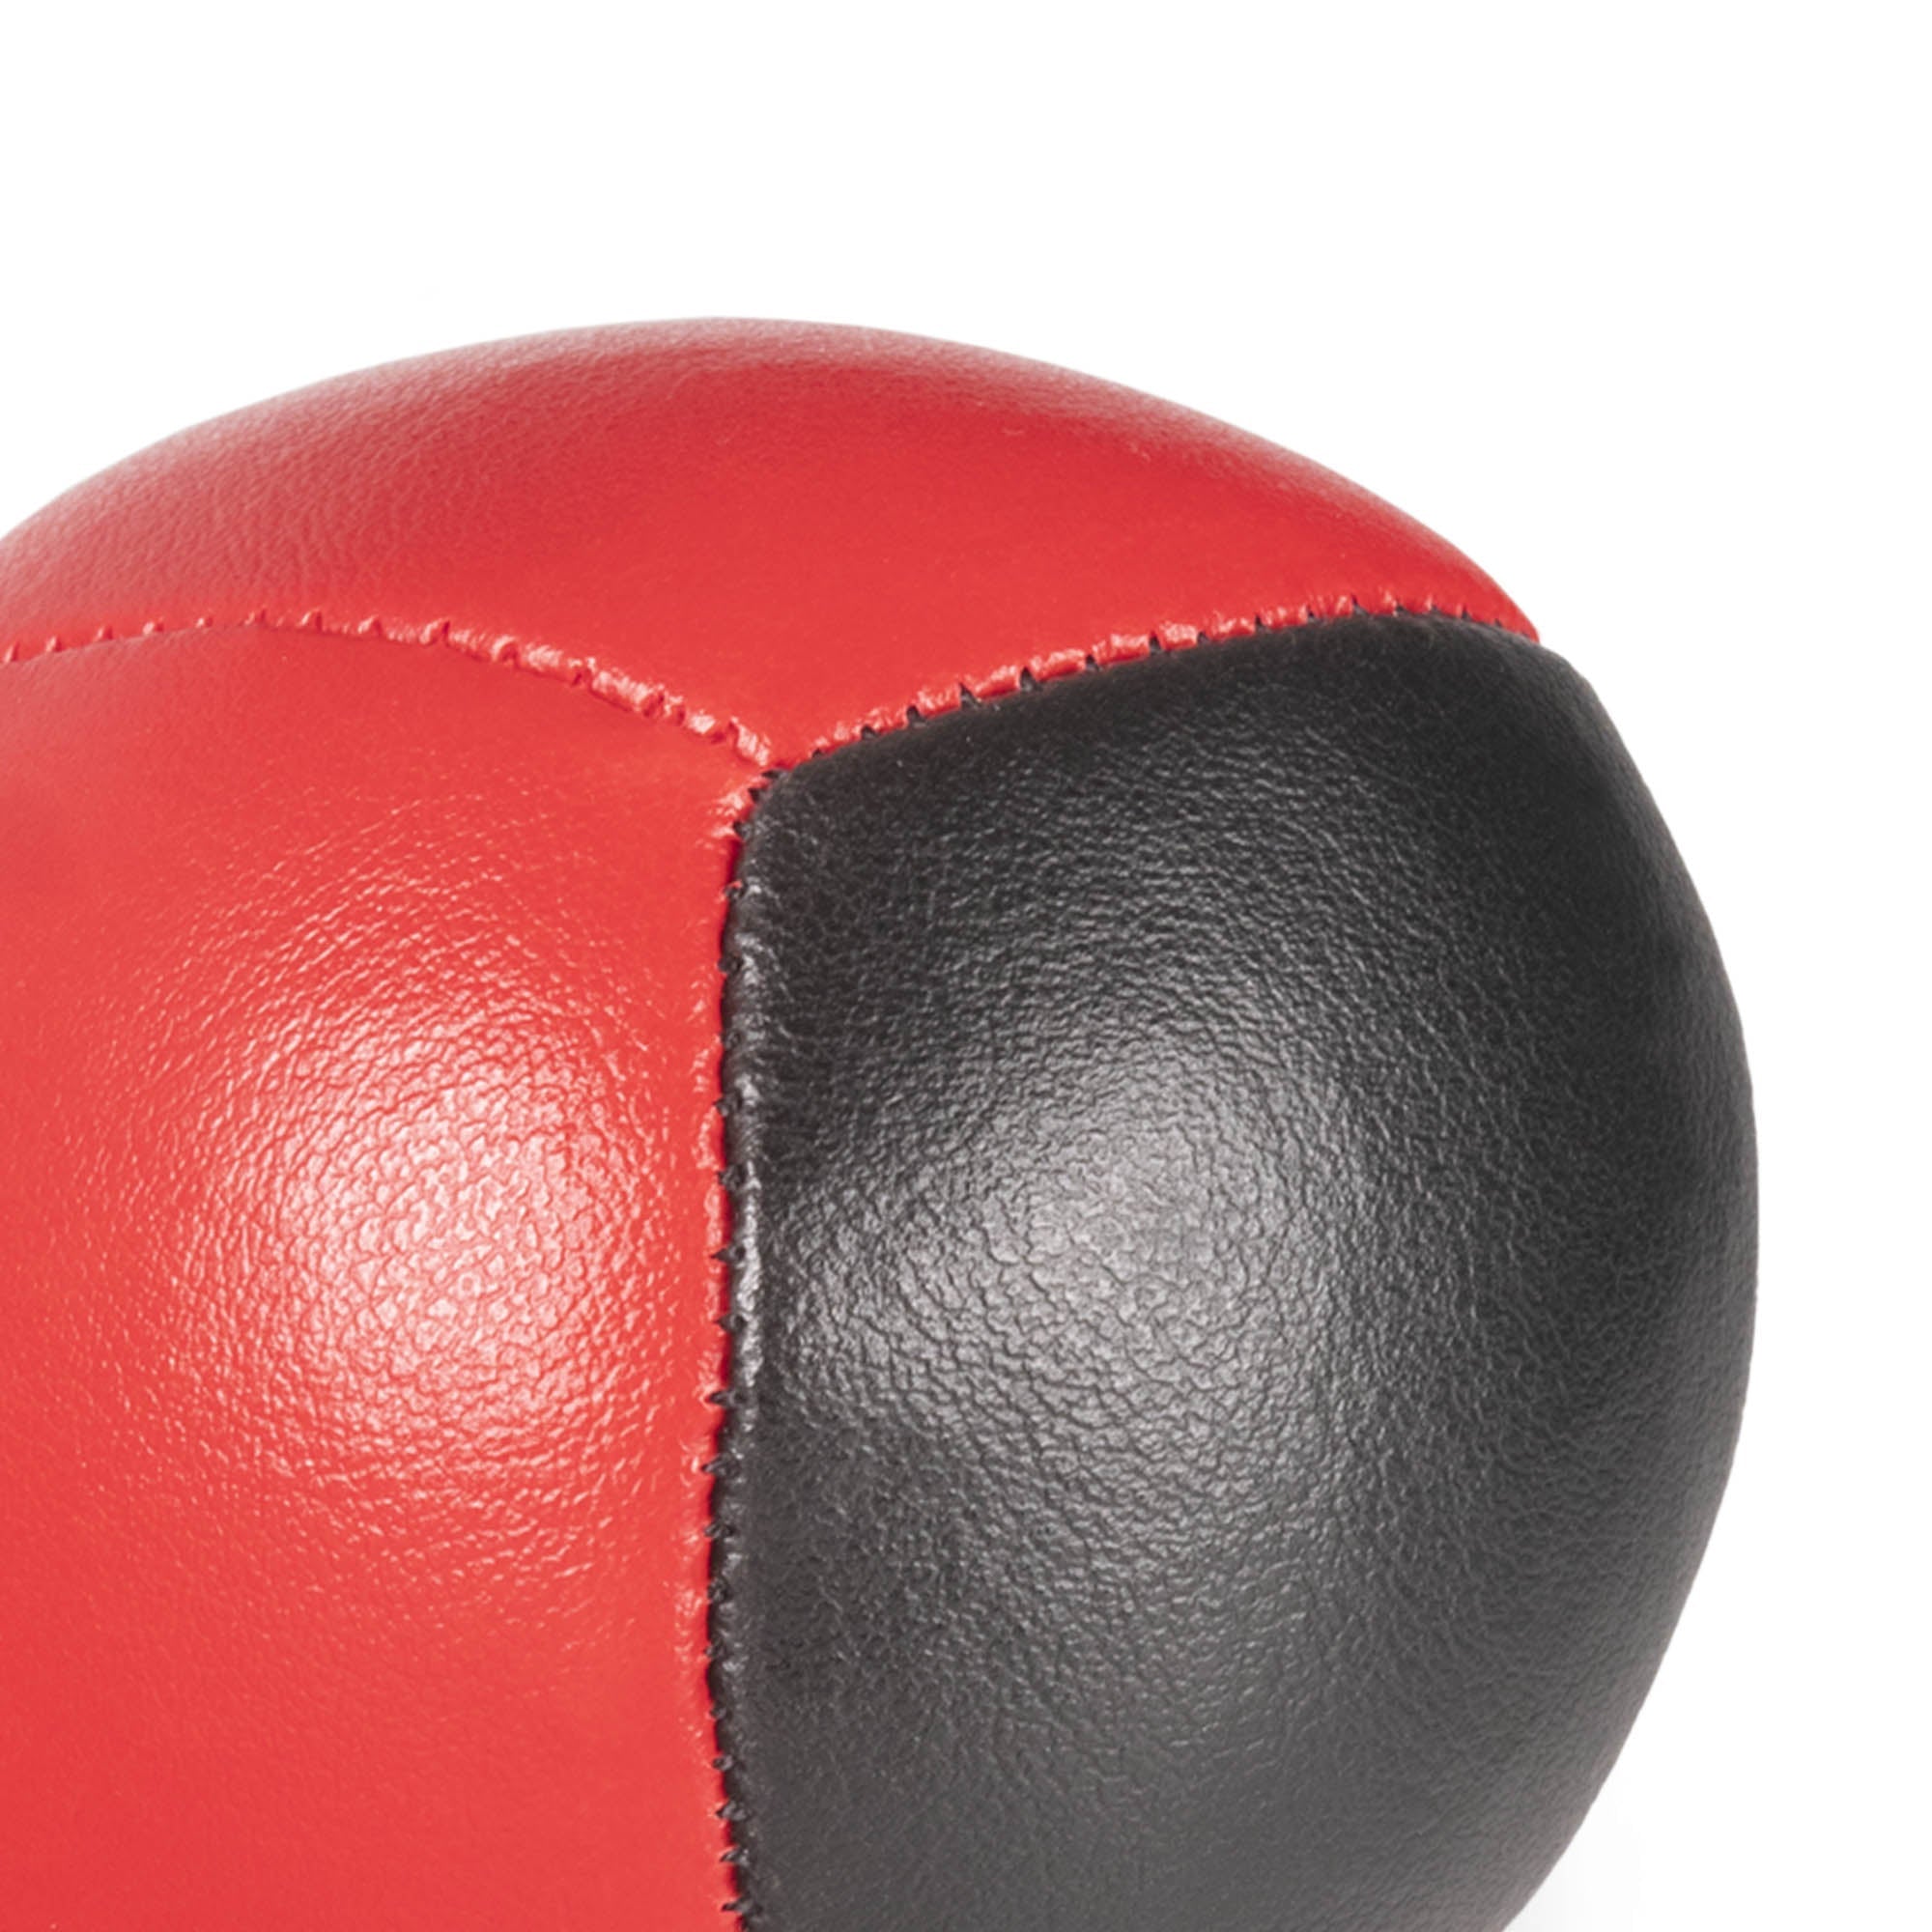 Firetoys 110g thud juggling ball, close up stitching red/black